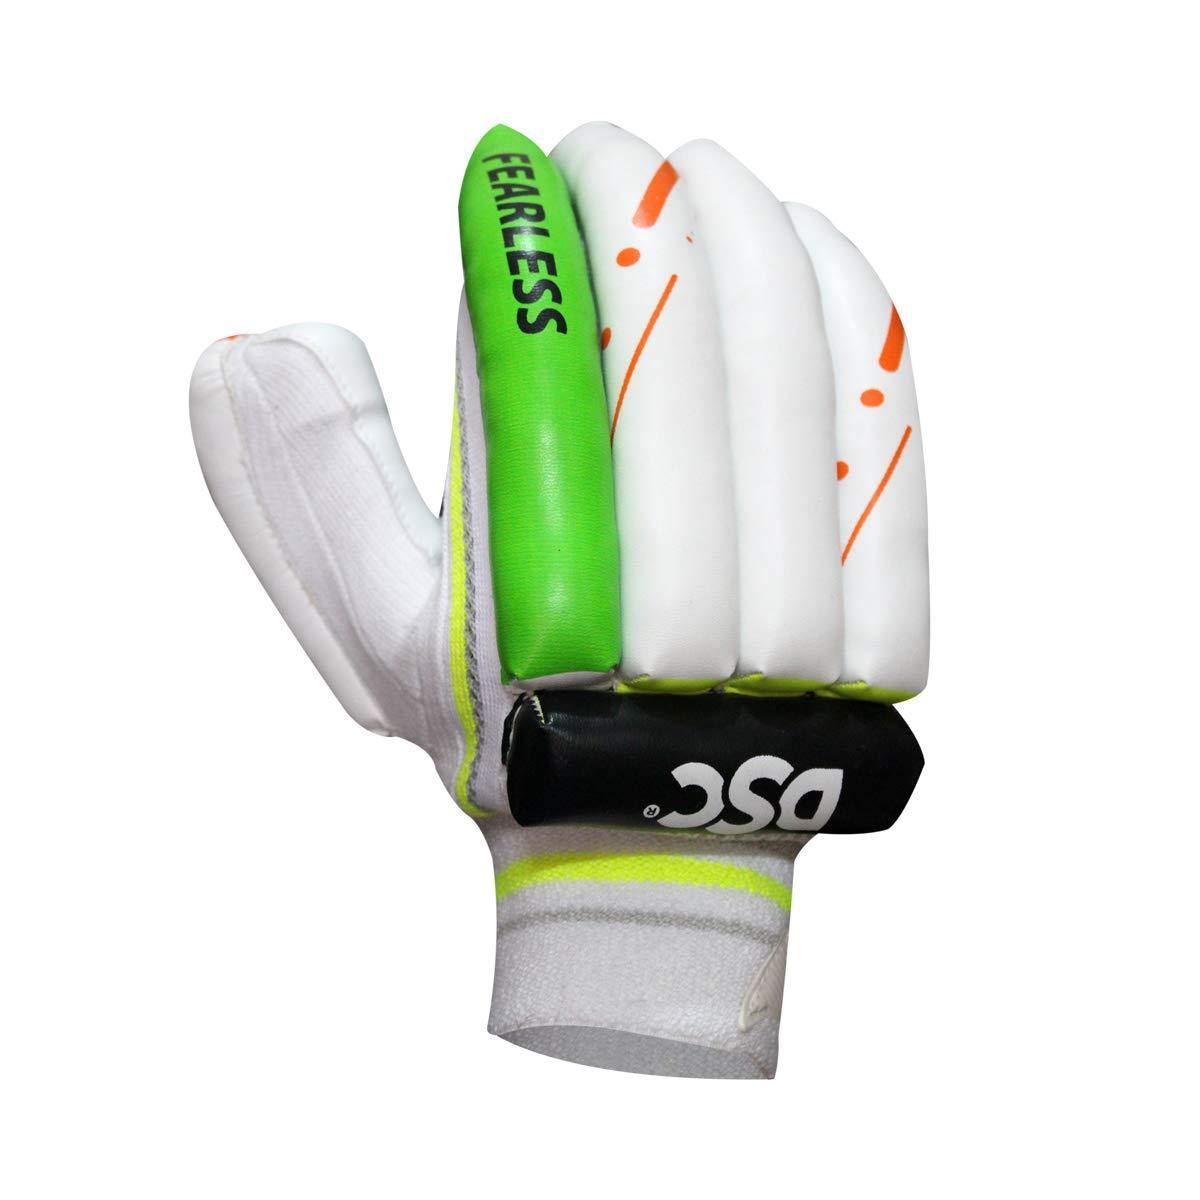 DSC Condor Ruffle Leather Cricket Batting Gloves (Left Hand) - Best Price online Prokicksports.com